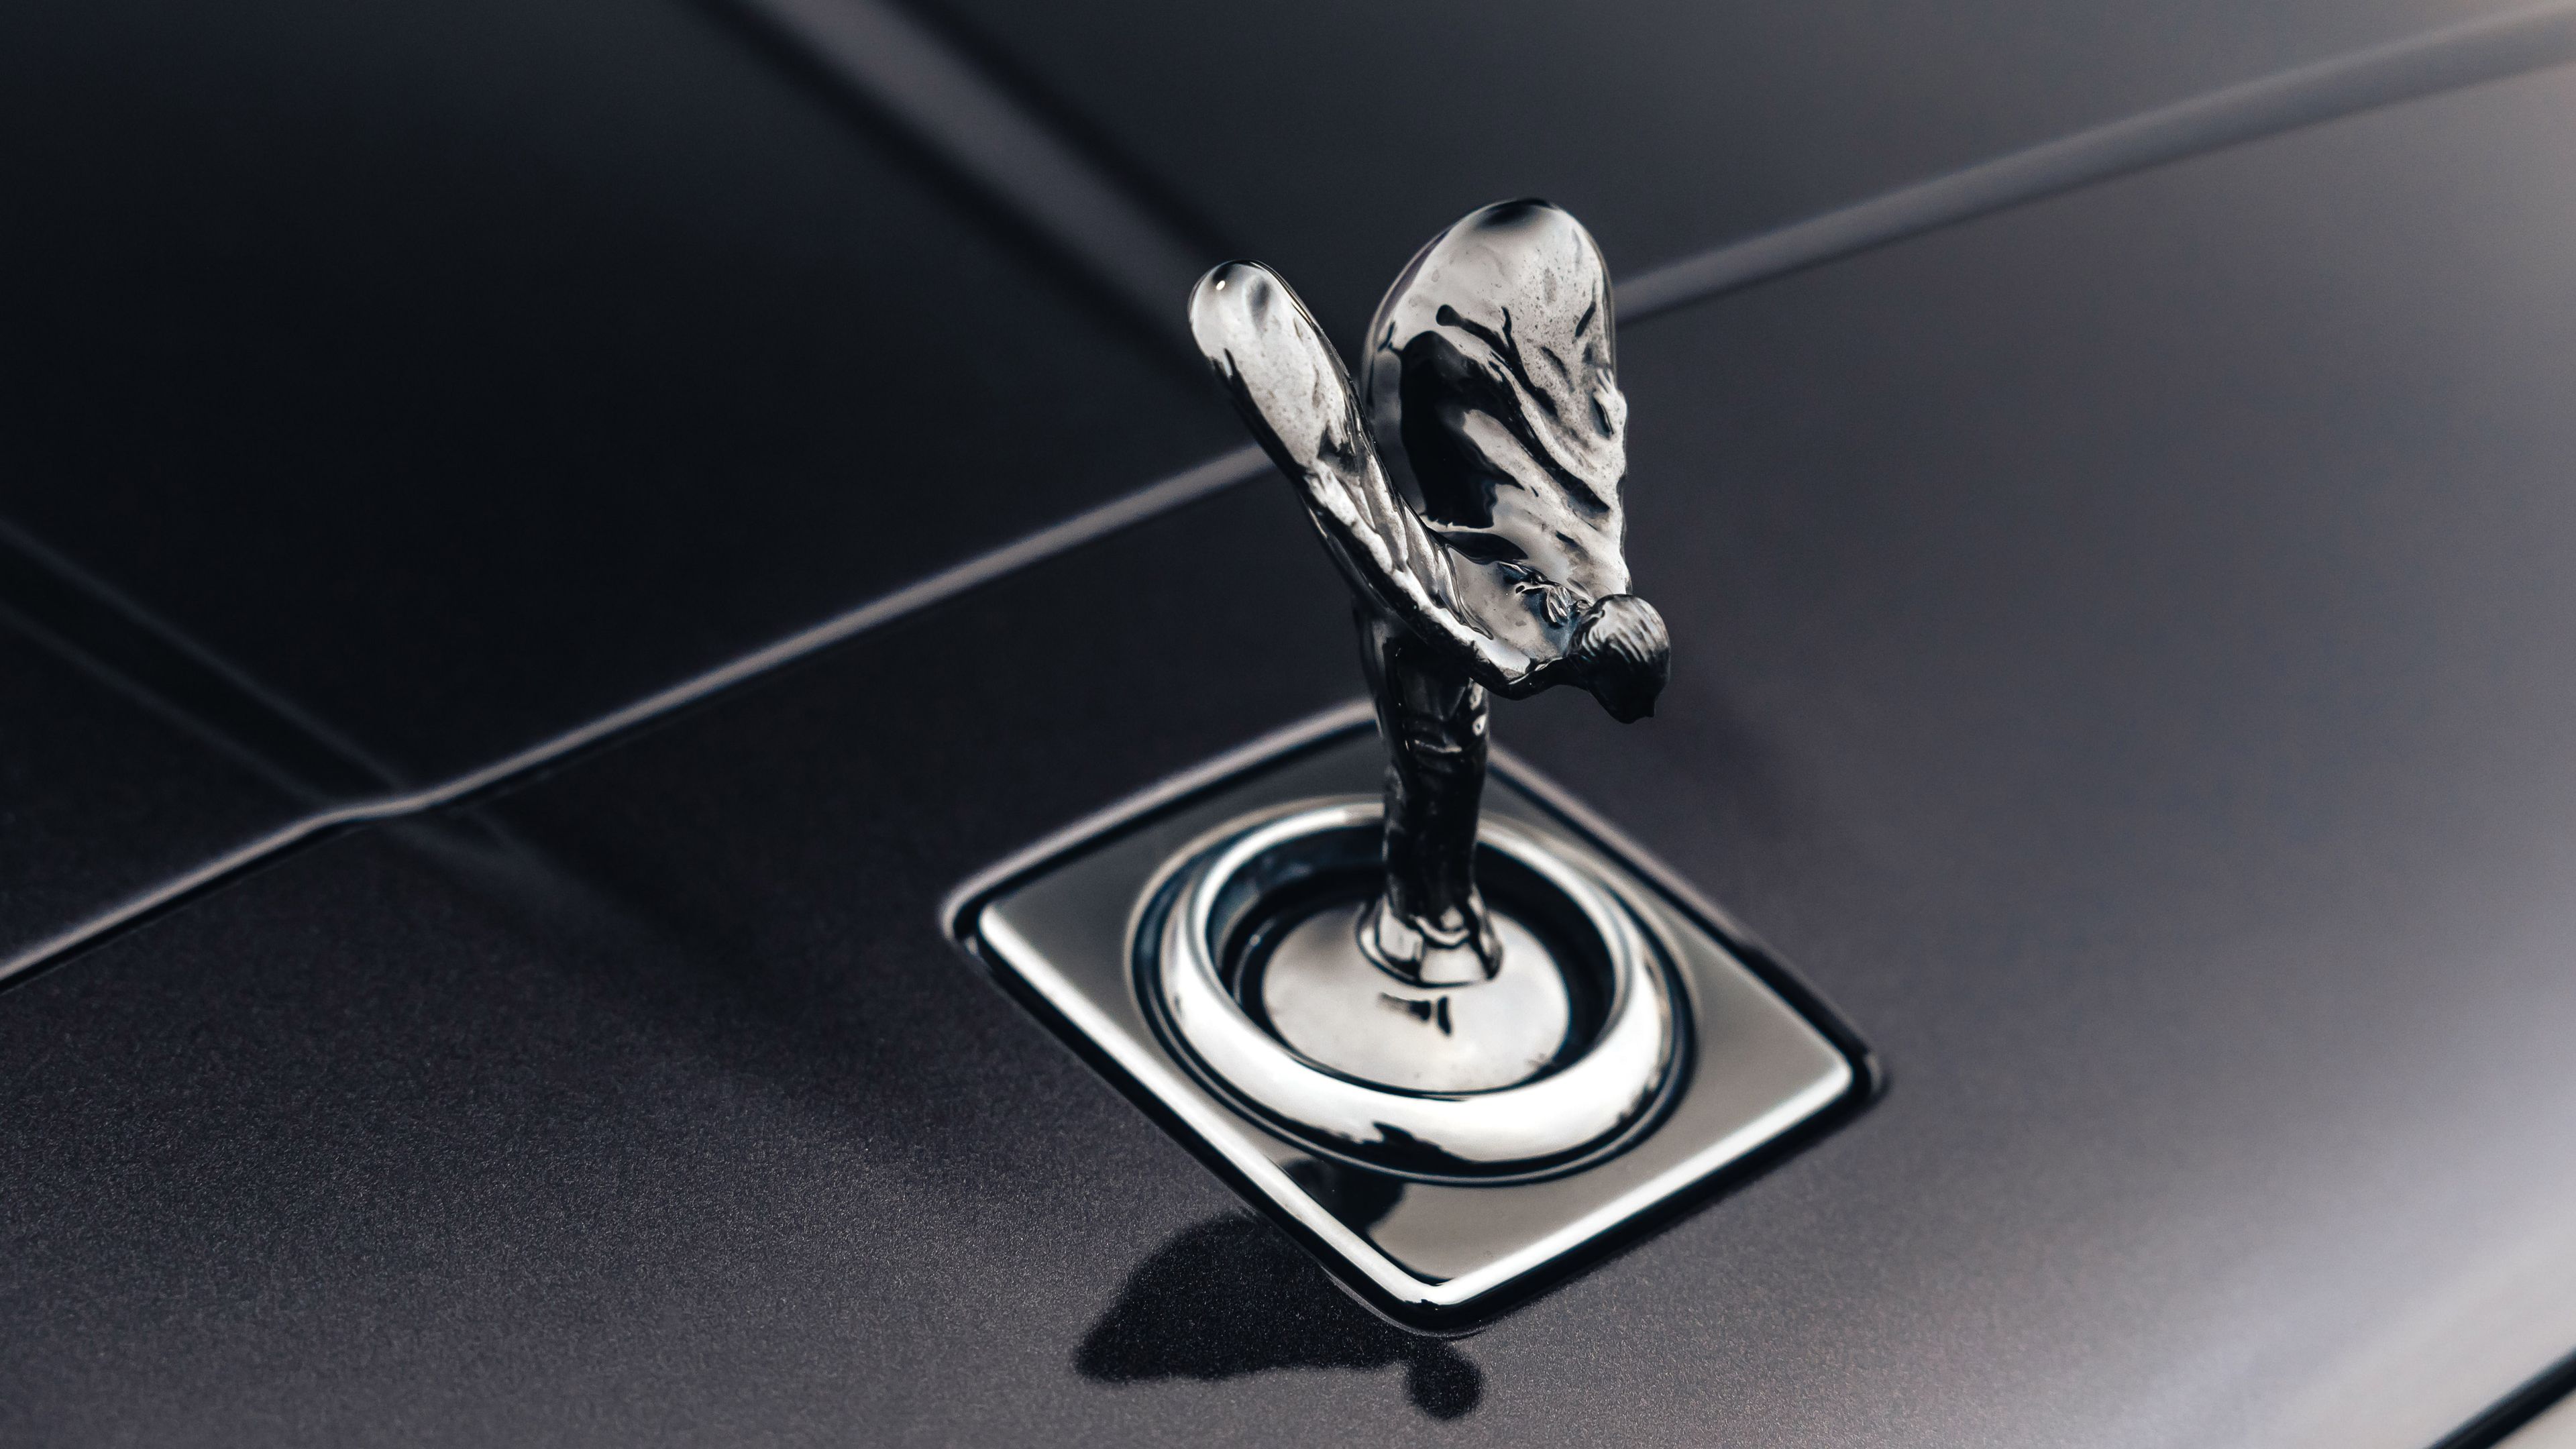 Prueba del Rolls-Royce Cullinan